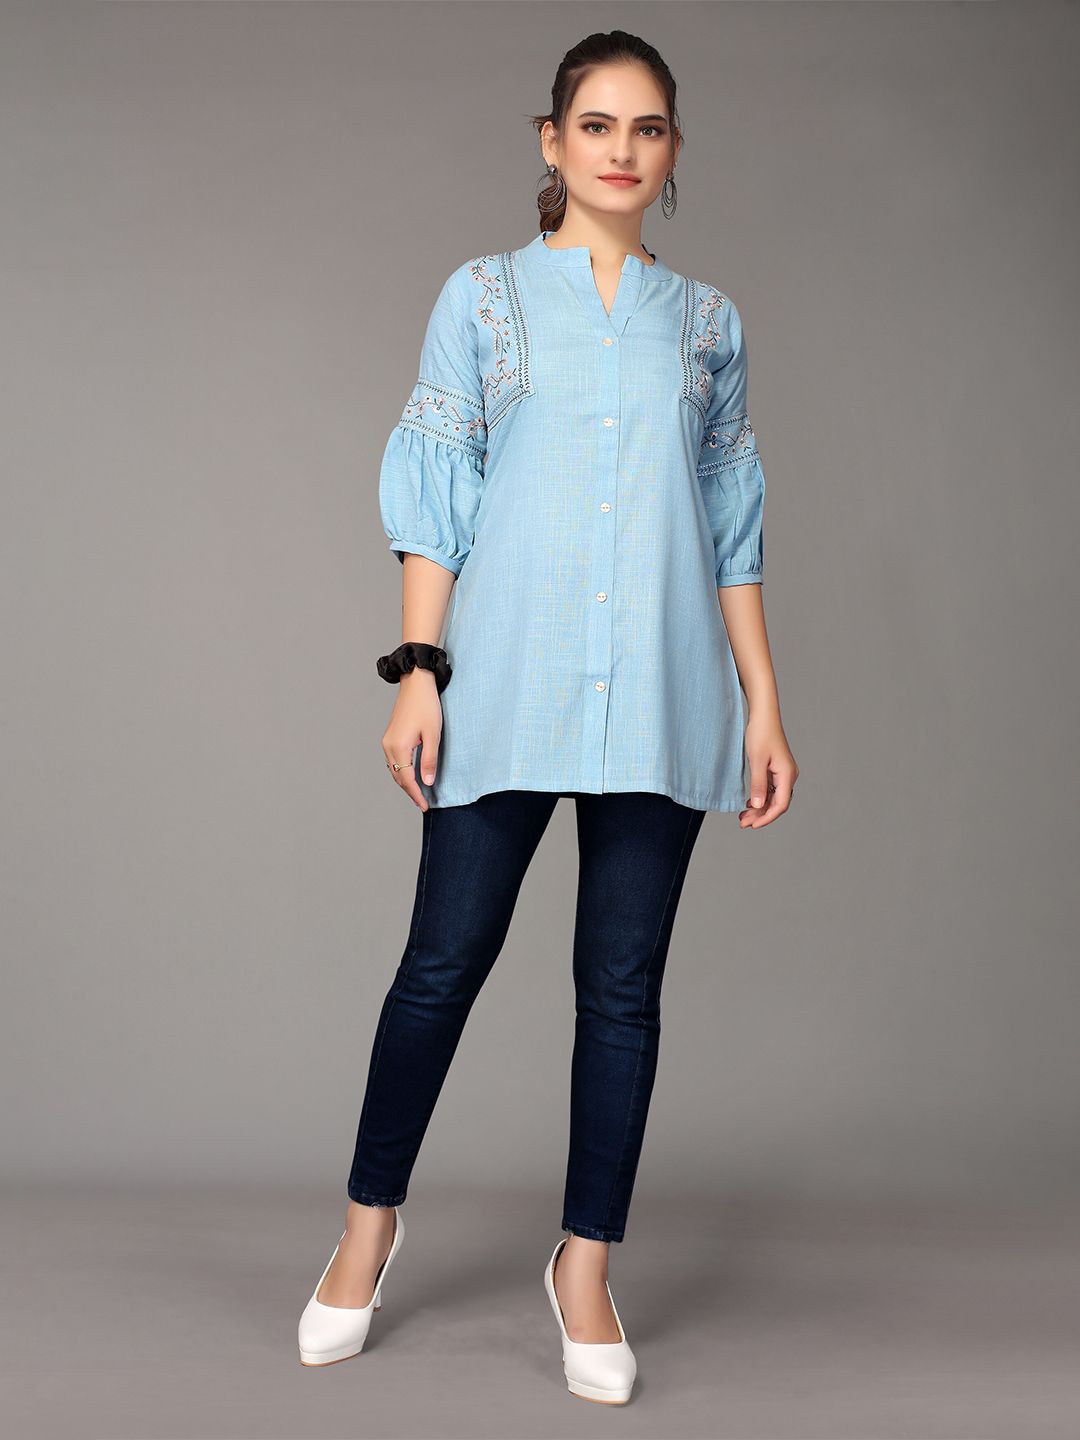 Nimayaa Blue Embroidered Mandarin Collar Shirt Style Top Price in India